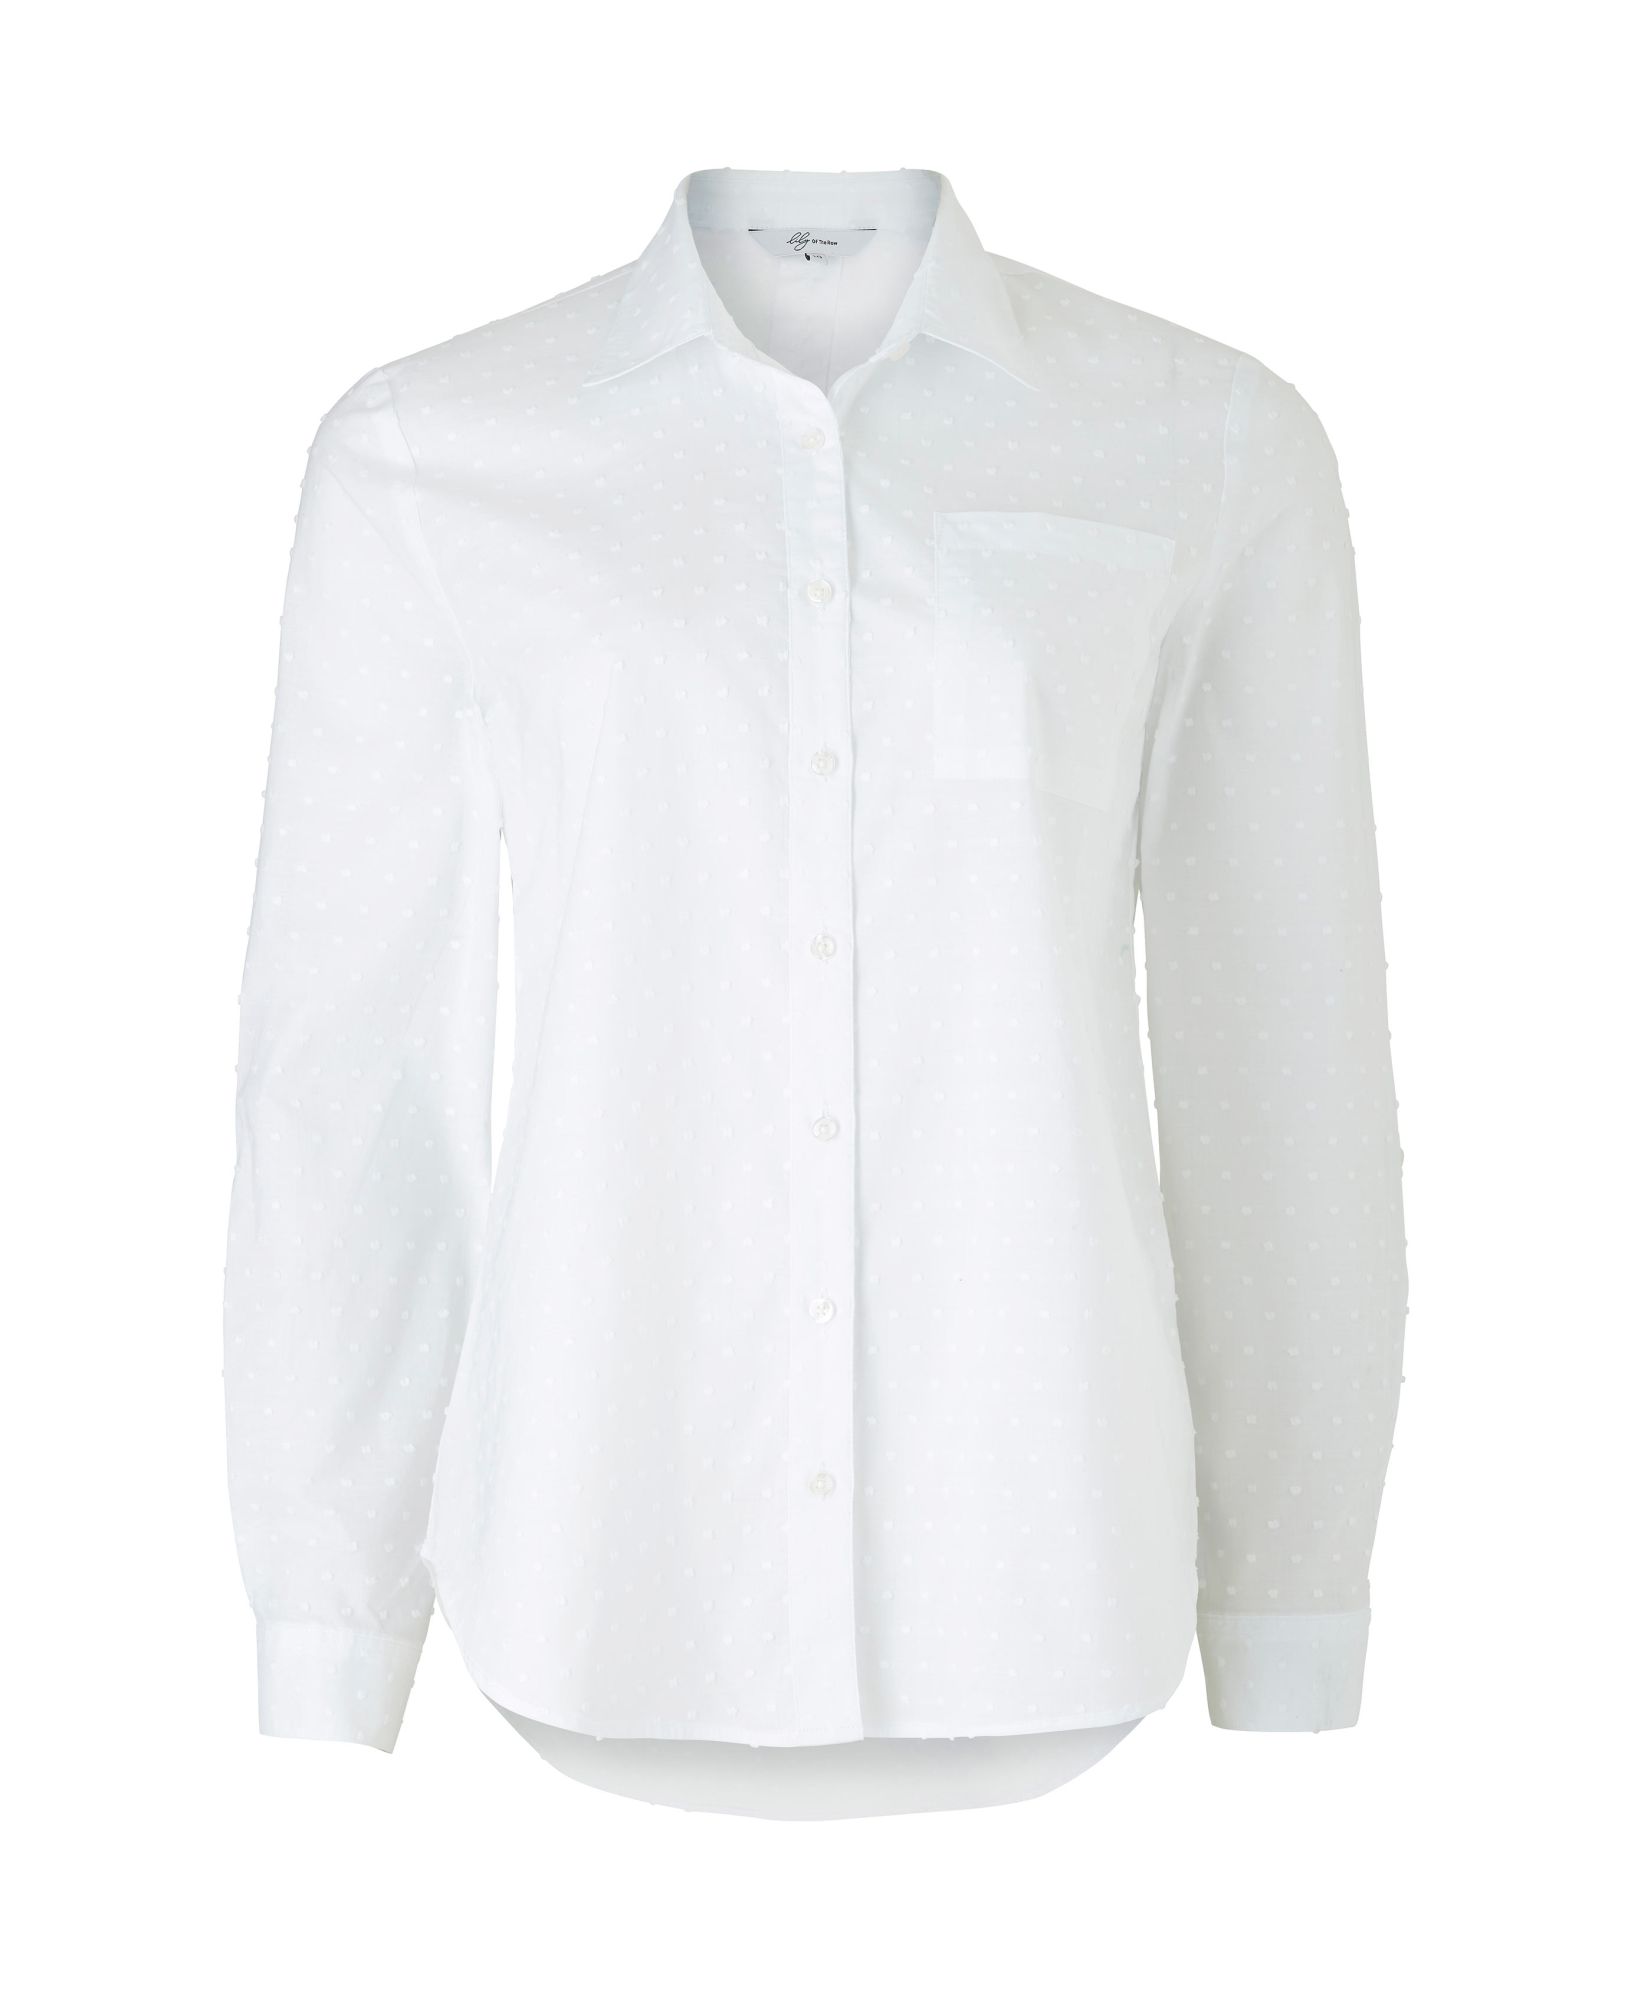 White Textured Semi-Fitted Women's Shirt 14